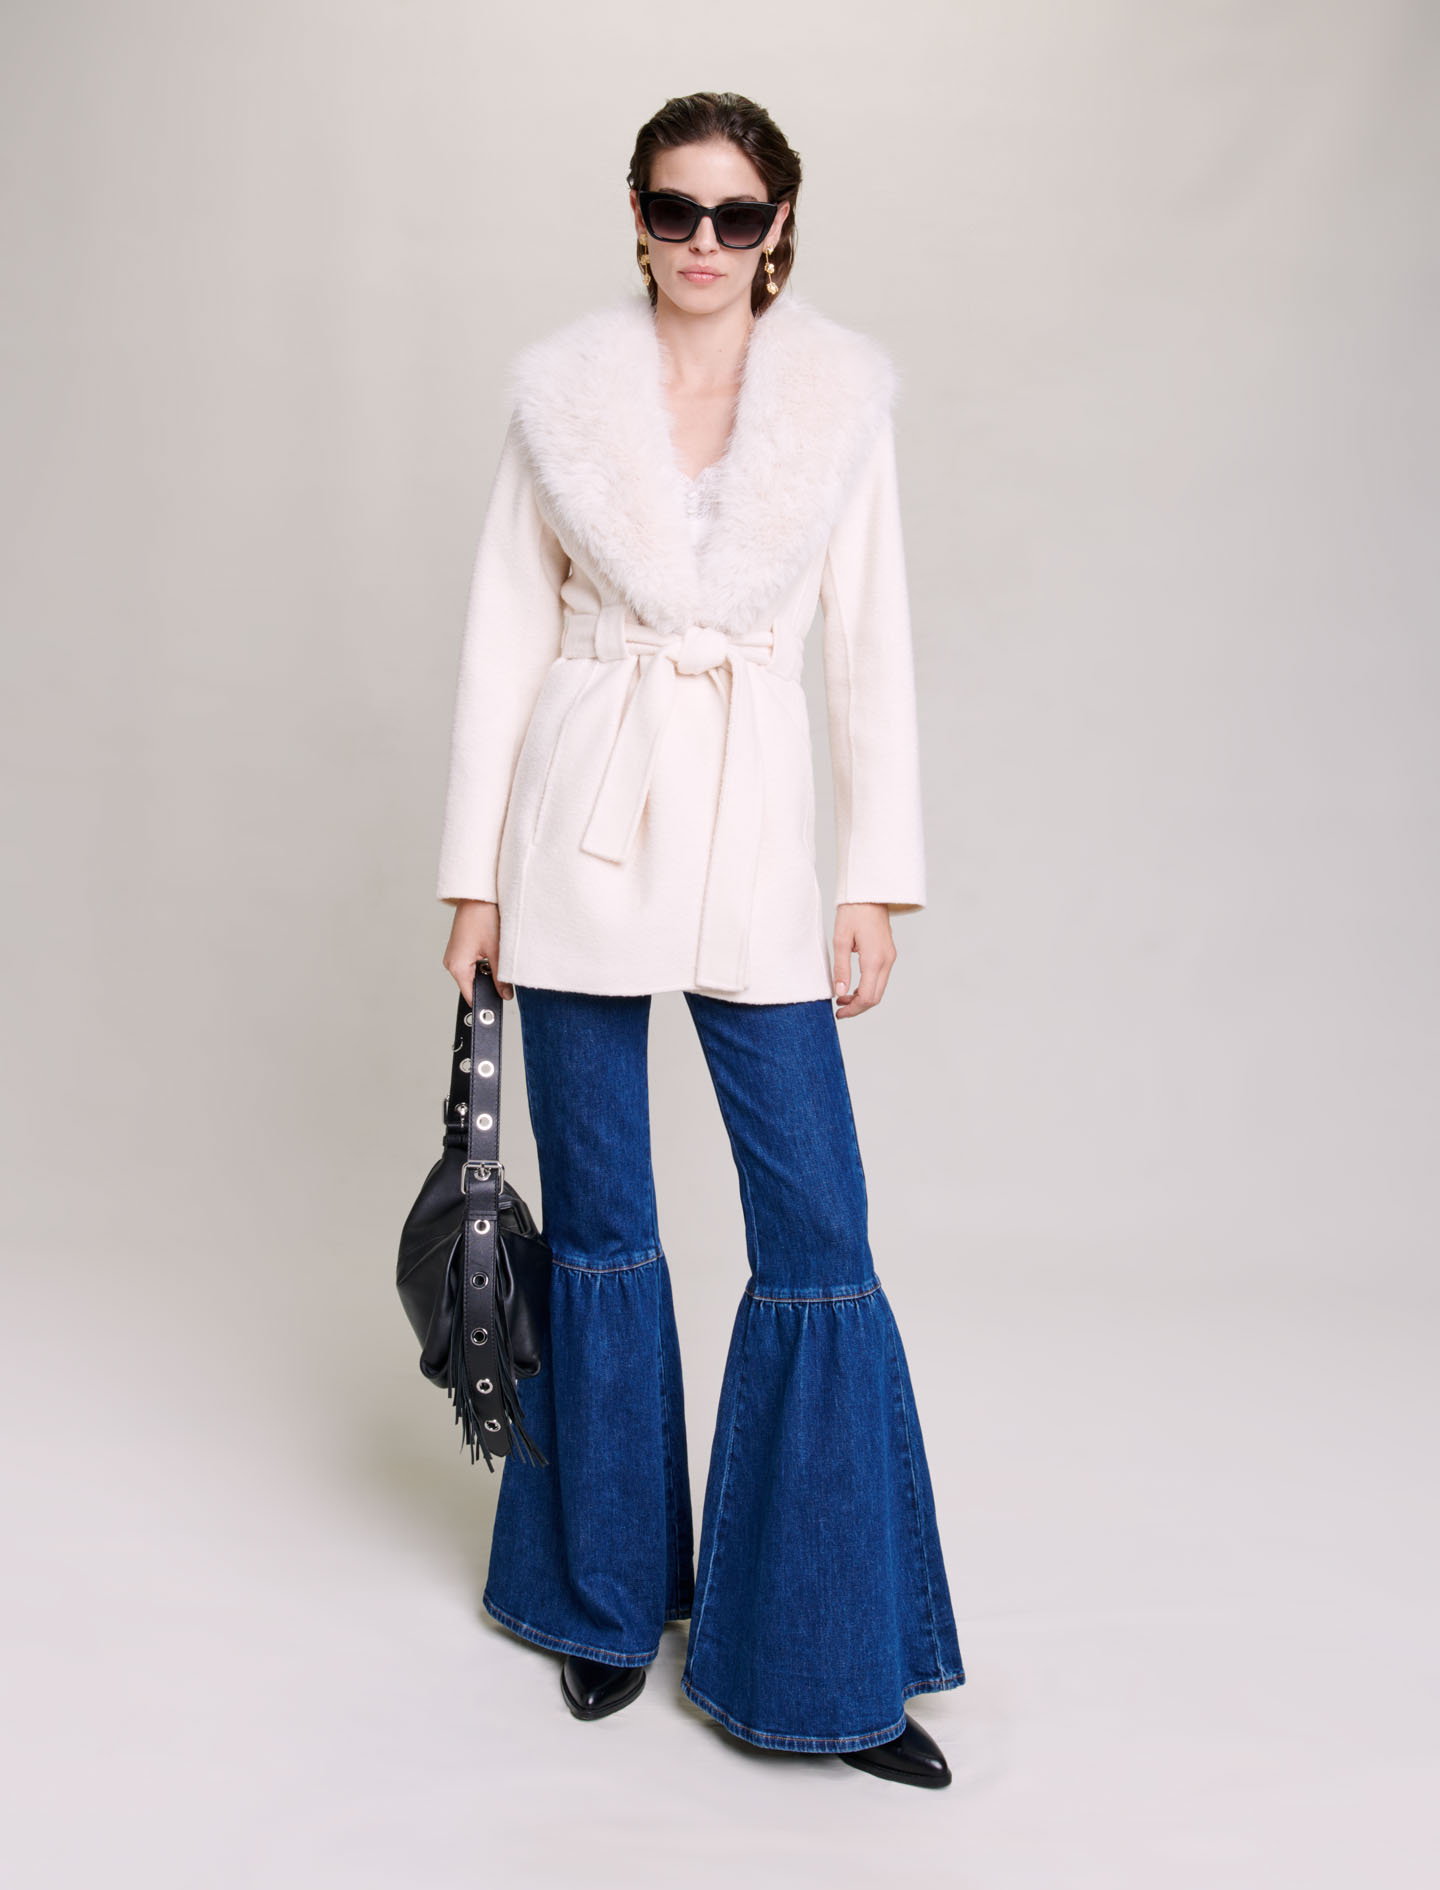 Maje Woman's wool, Belted short coat for Fall/Winter, in color Ecru / Beige